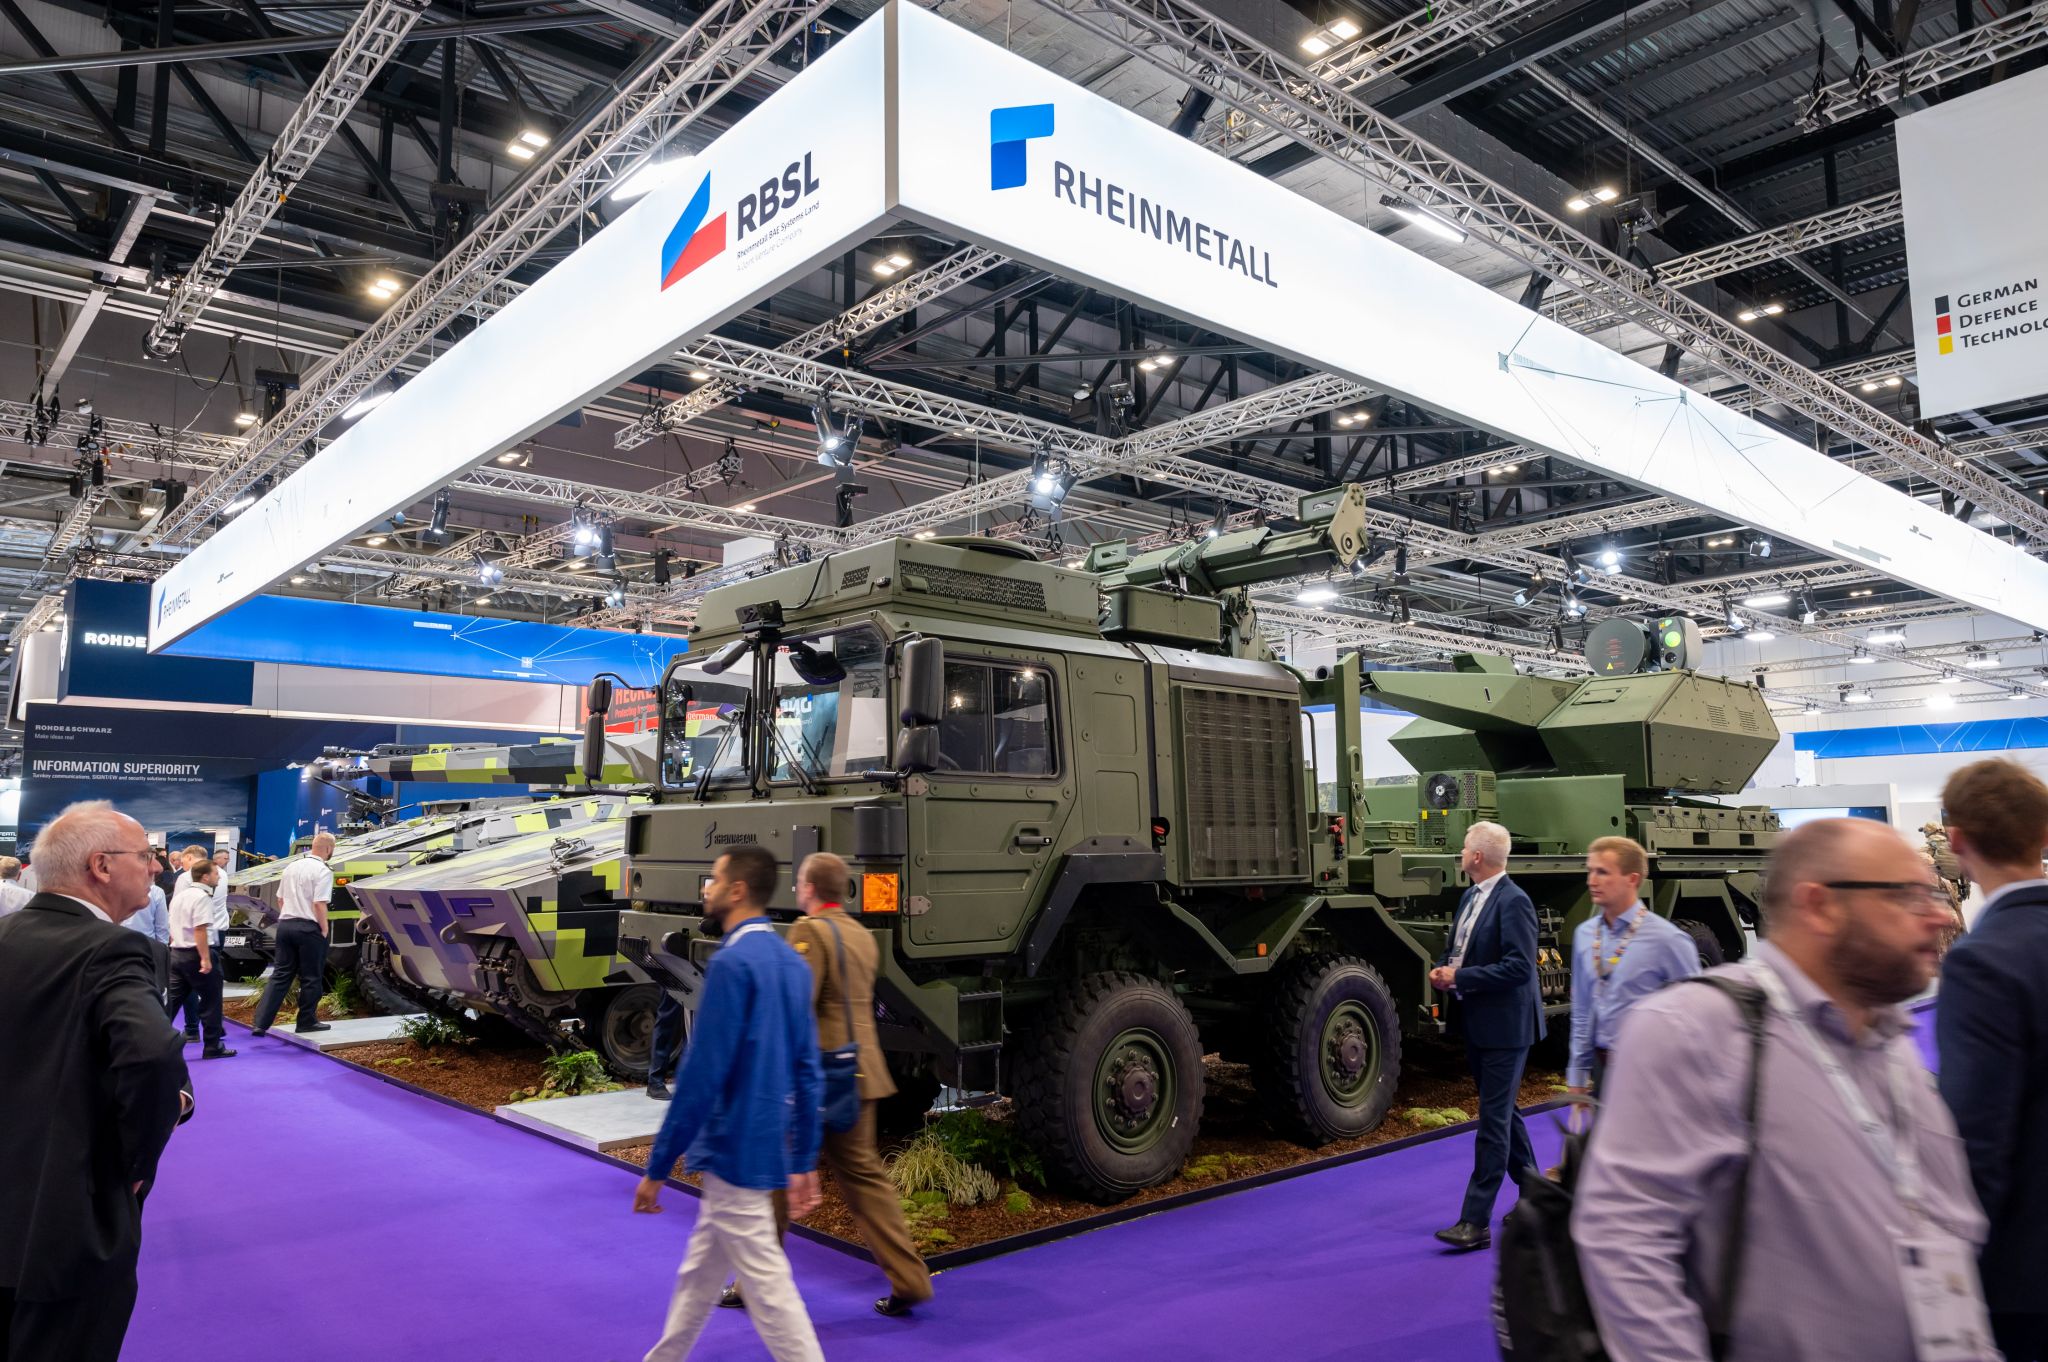 Rheinmetall plans to establish a new air defense company in Ukraine